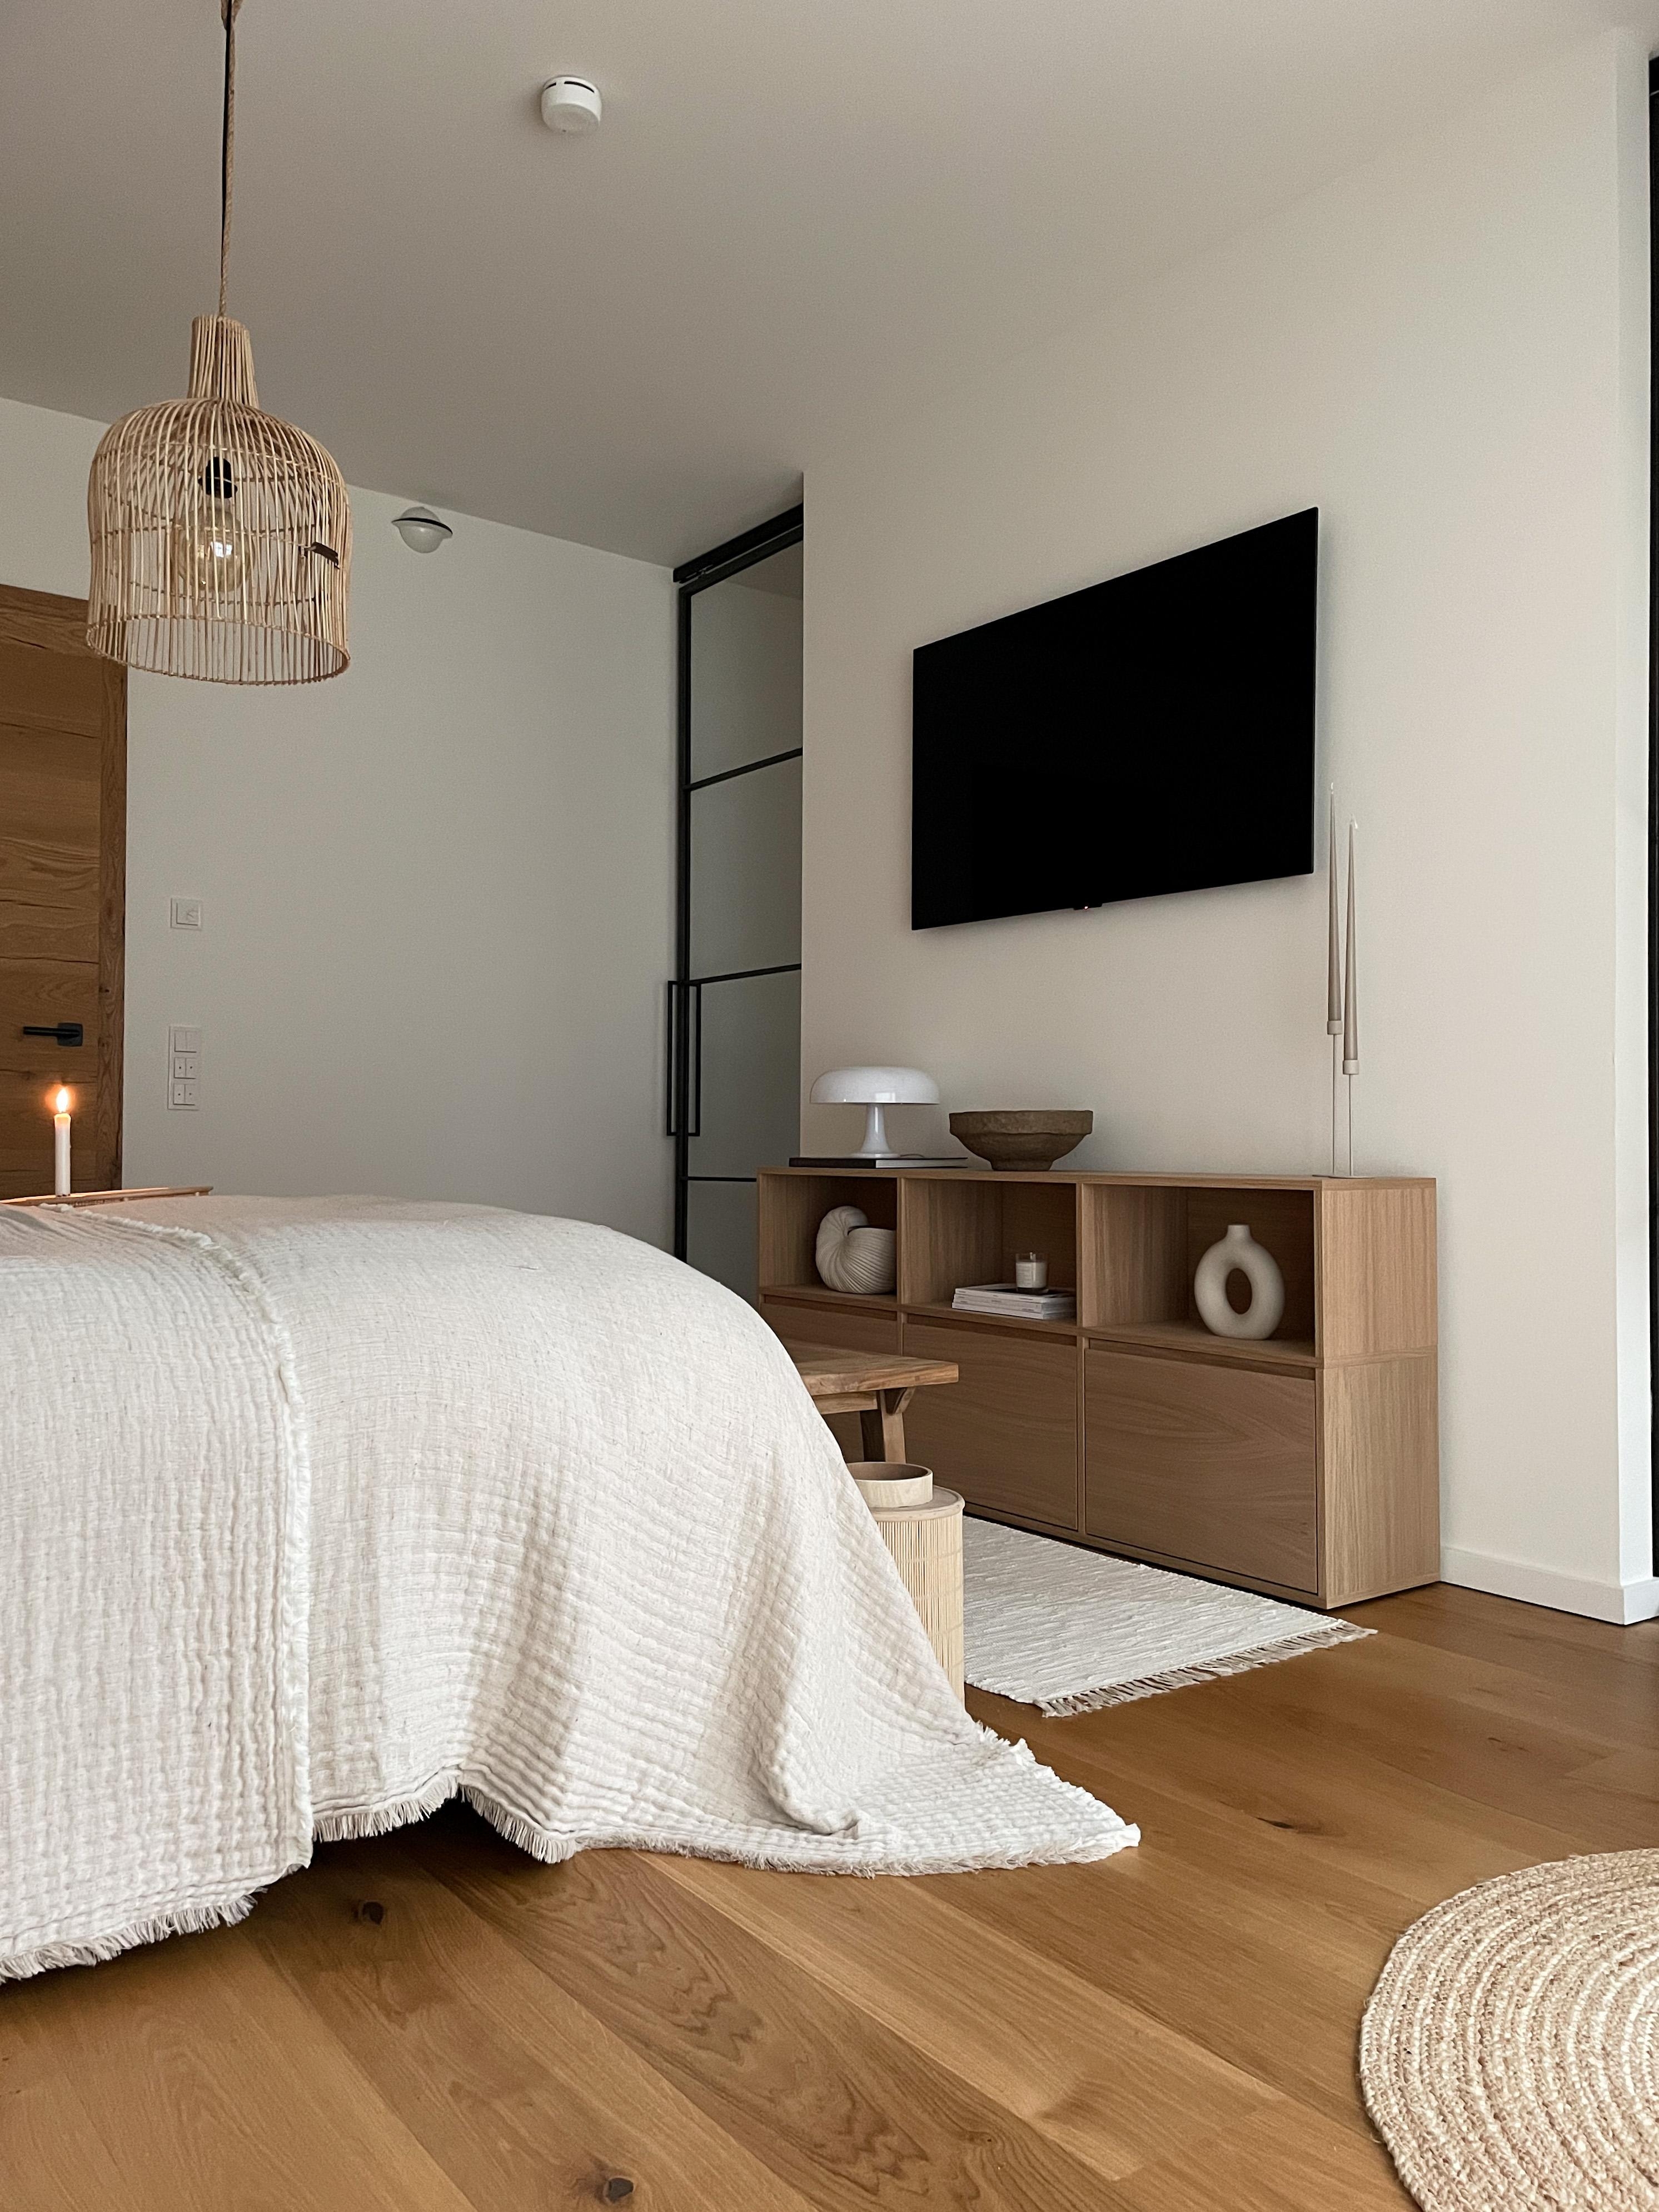 🖤🤎🤍
#Schlafzimmer #Schlafzimmerinspo #Bohoschlafzimmer #couchstyle #interior 